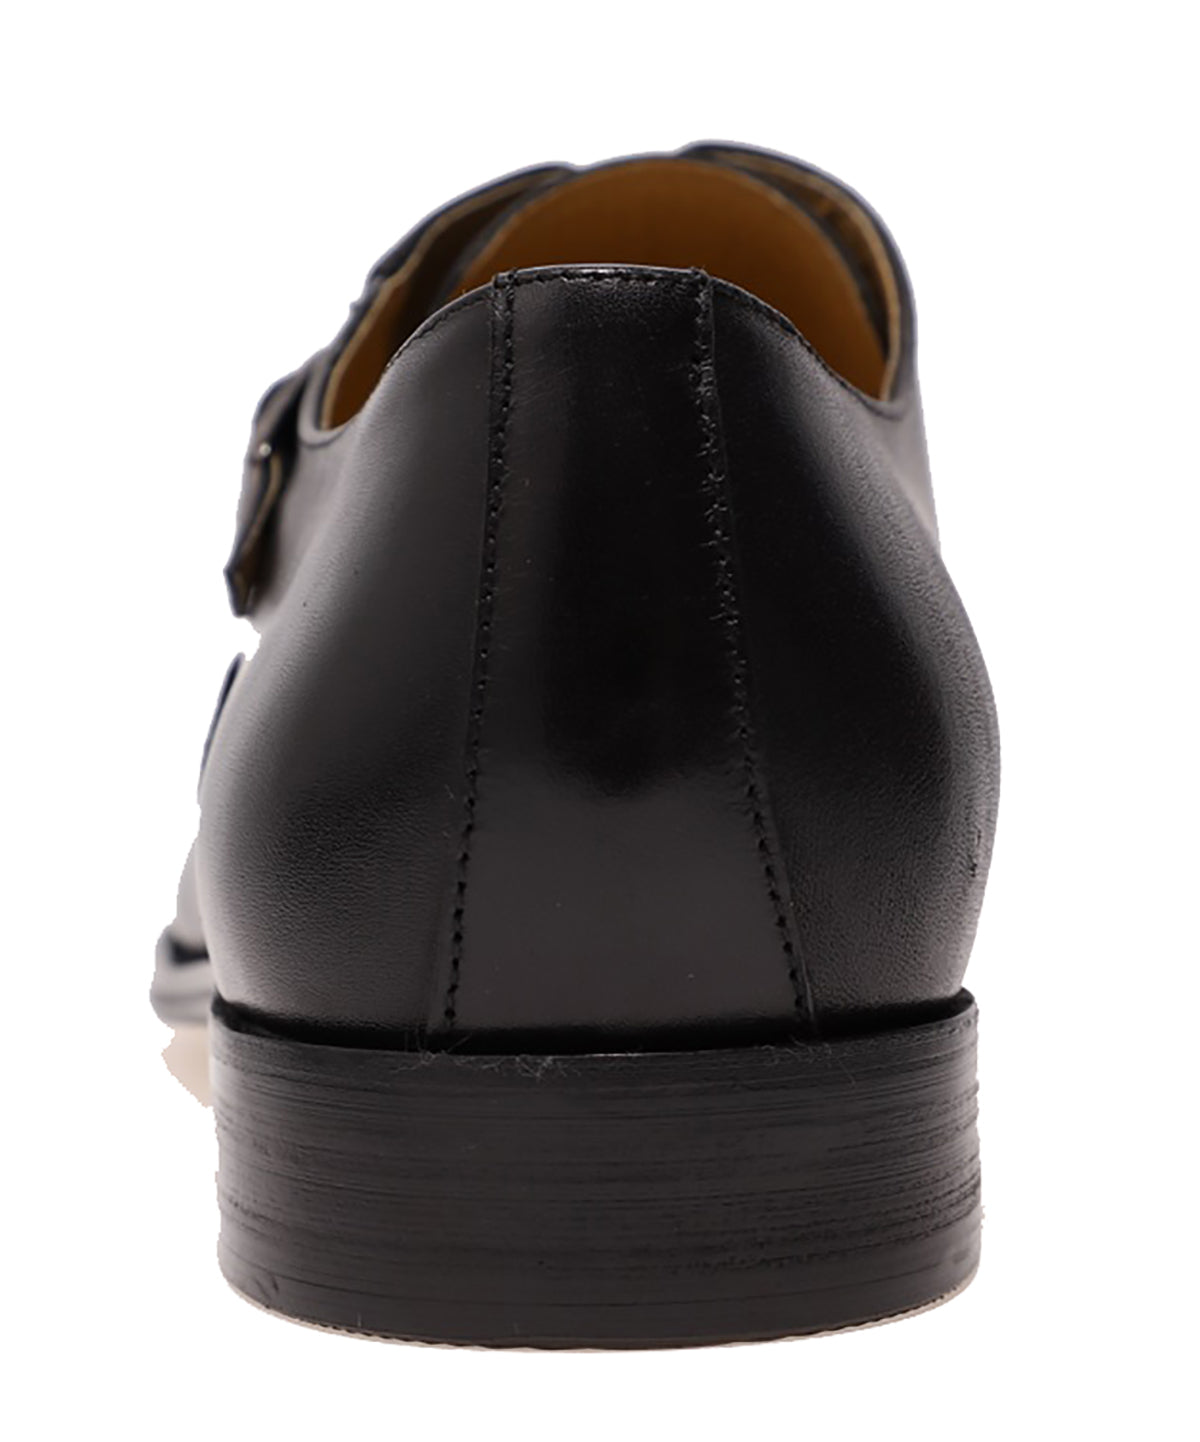 Zapatos Oxford hechos a mano con hebilla Tuexdo para hombre